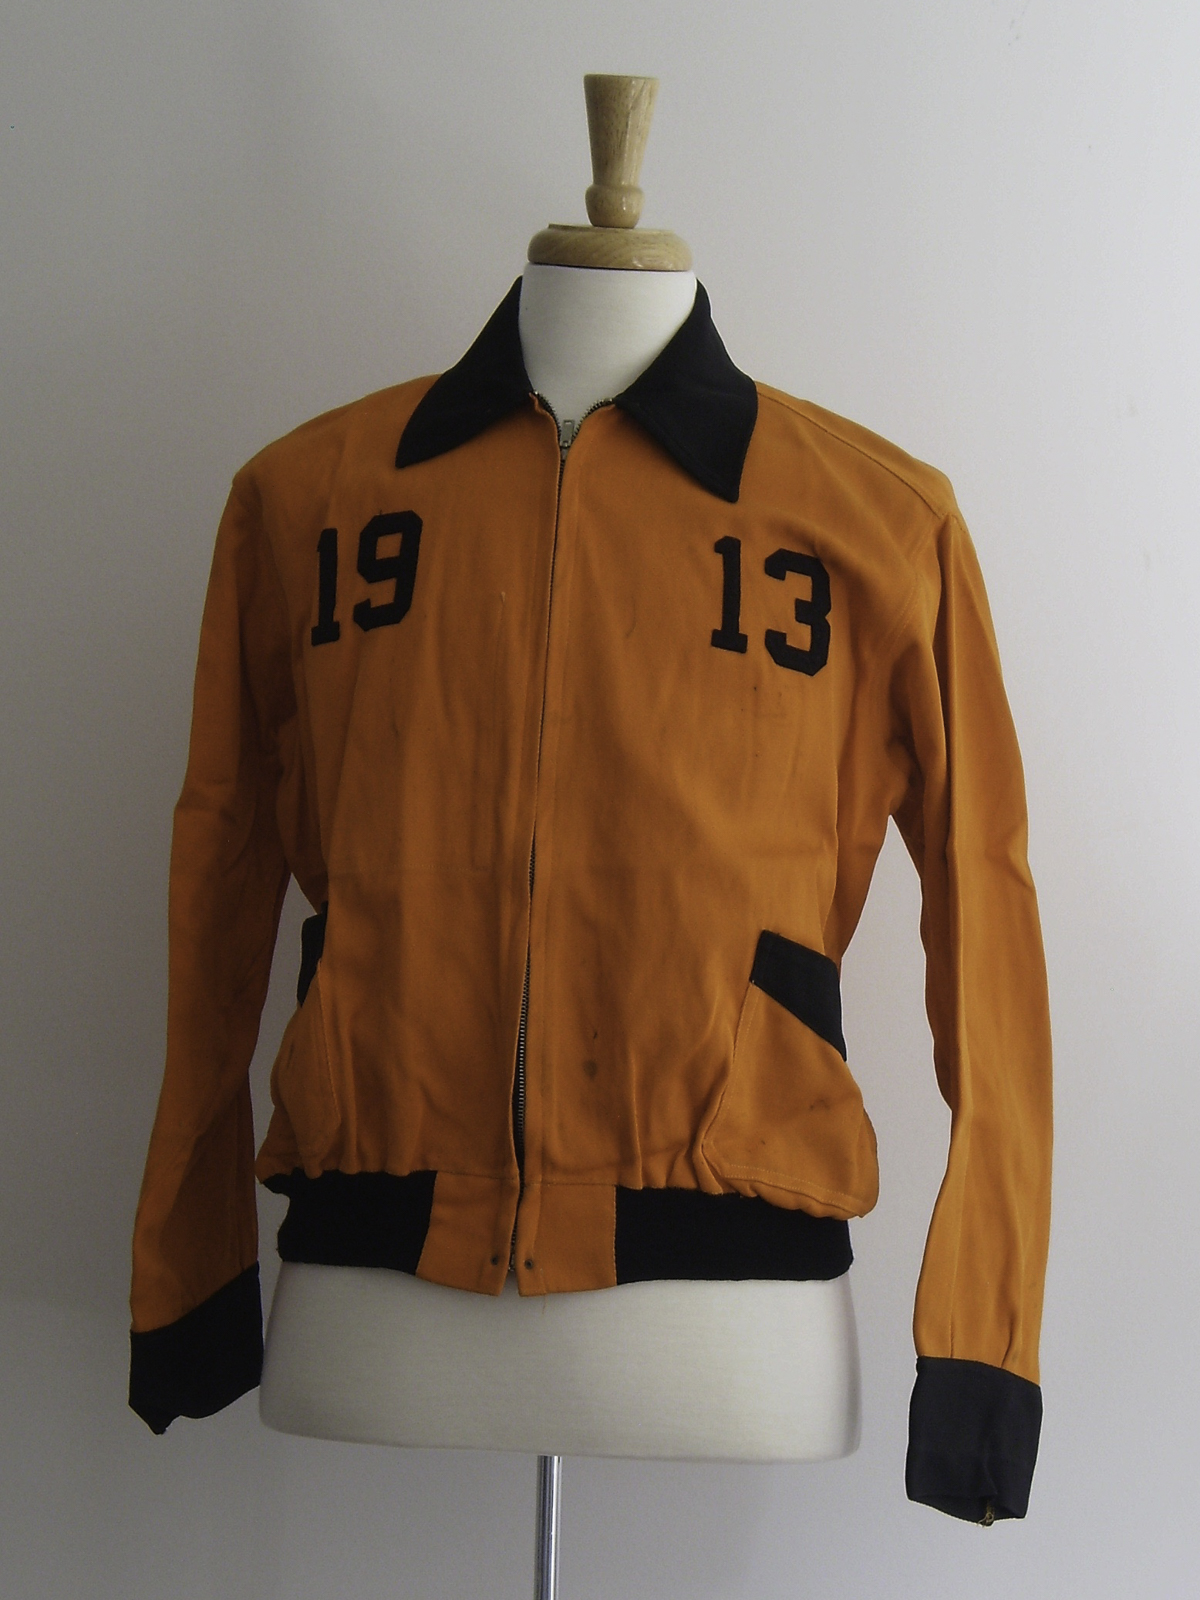 Reunion Jacket 1913 Variation 1 Front